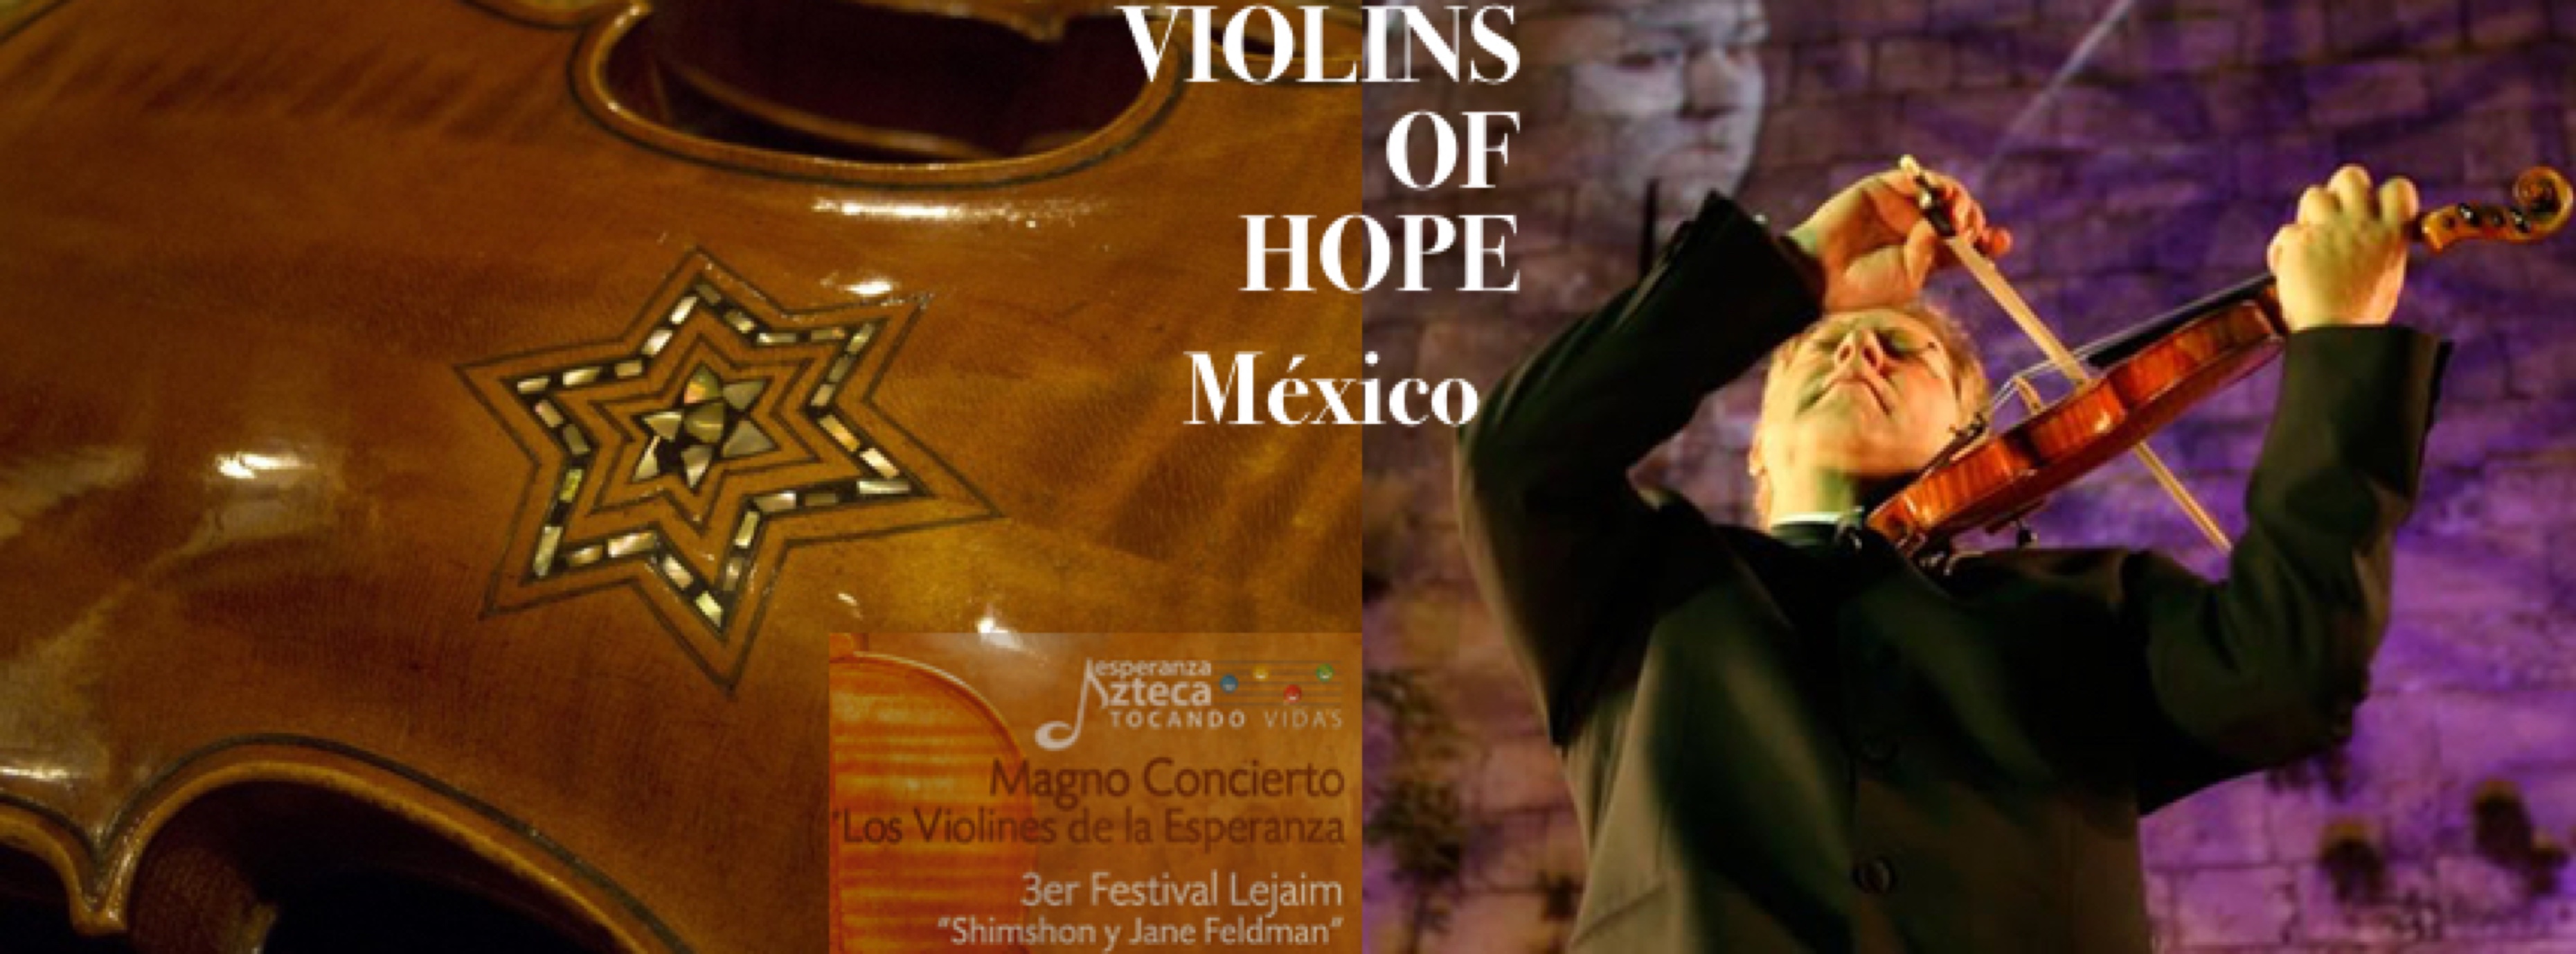 violines de la esperanza orquesta azteca